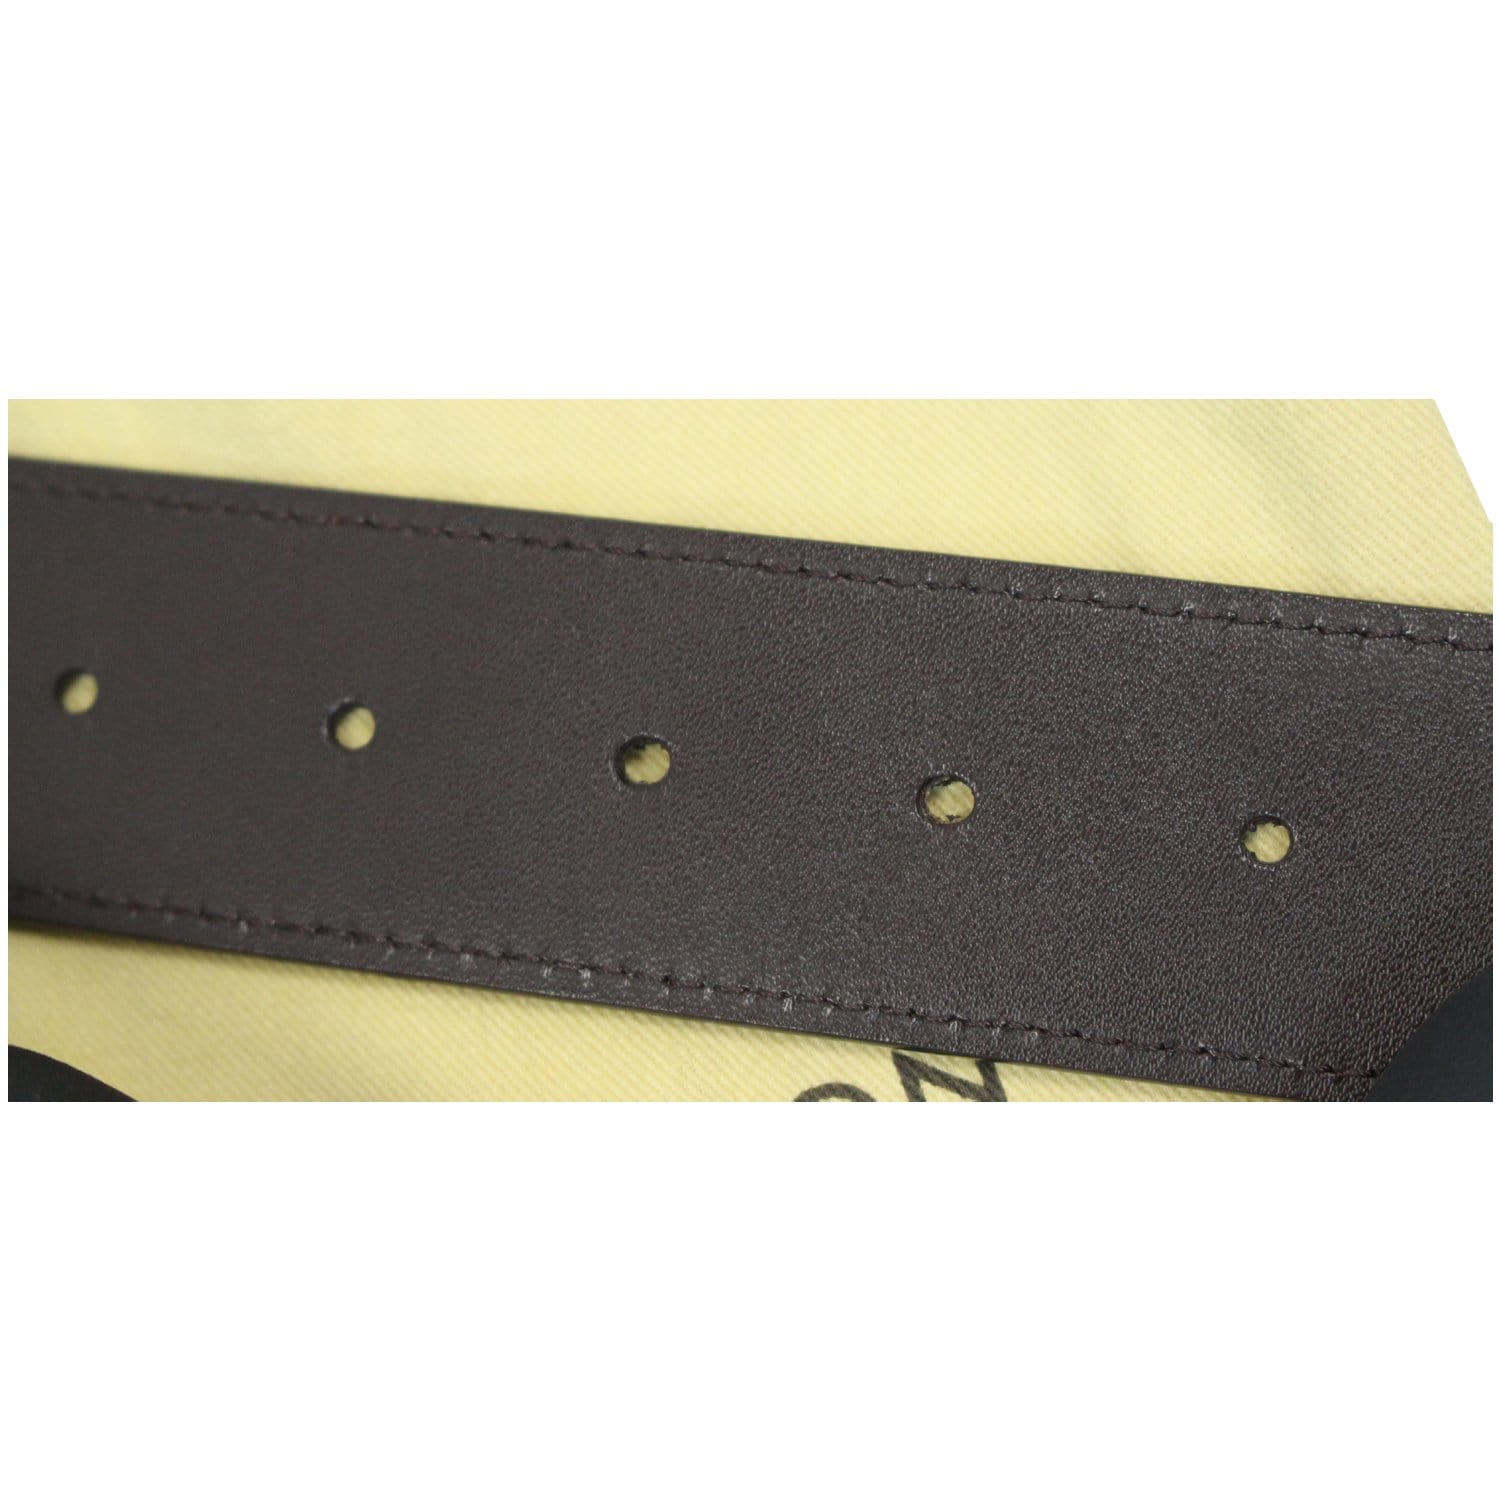 Authentic Louis Vuitton Men's Leather Belt Monogram Used 36 Size